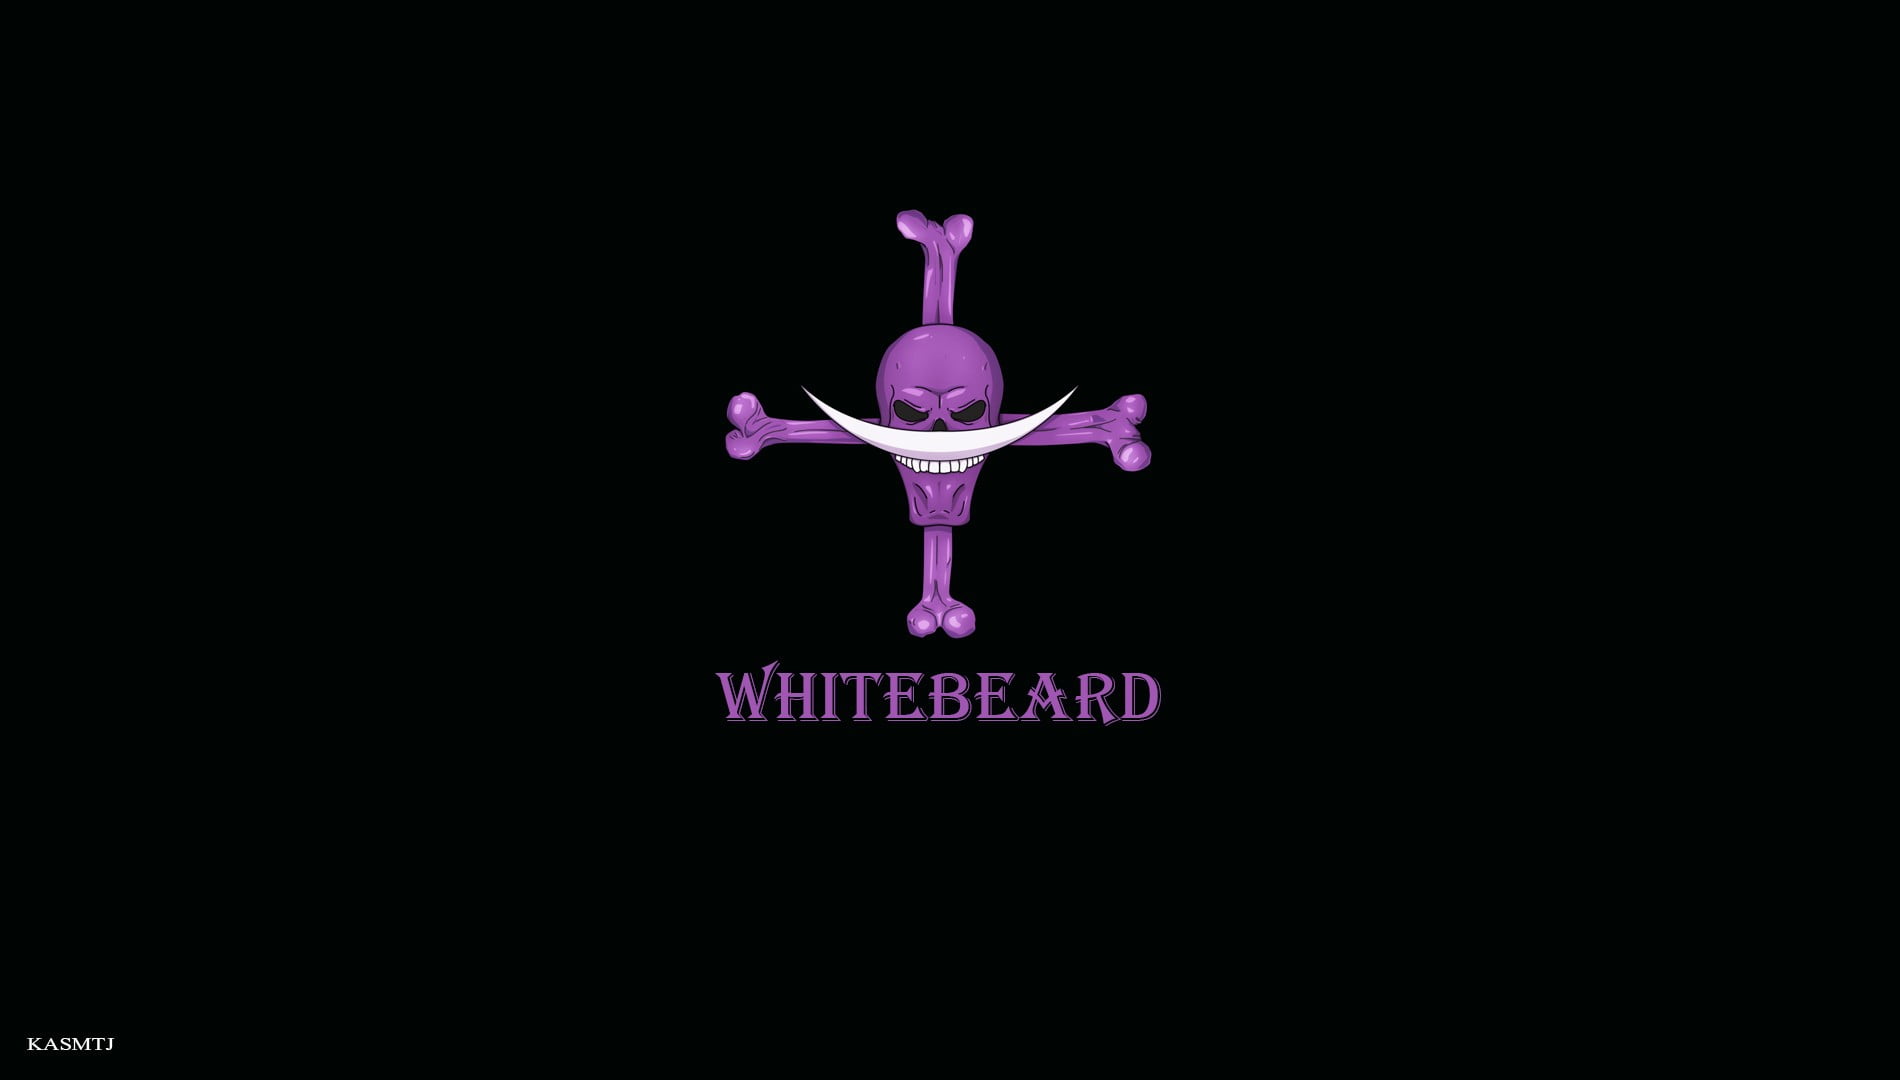 WhiteBeard logo wallpaper HD wallpaper.